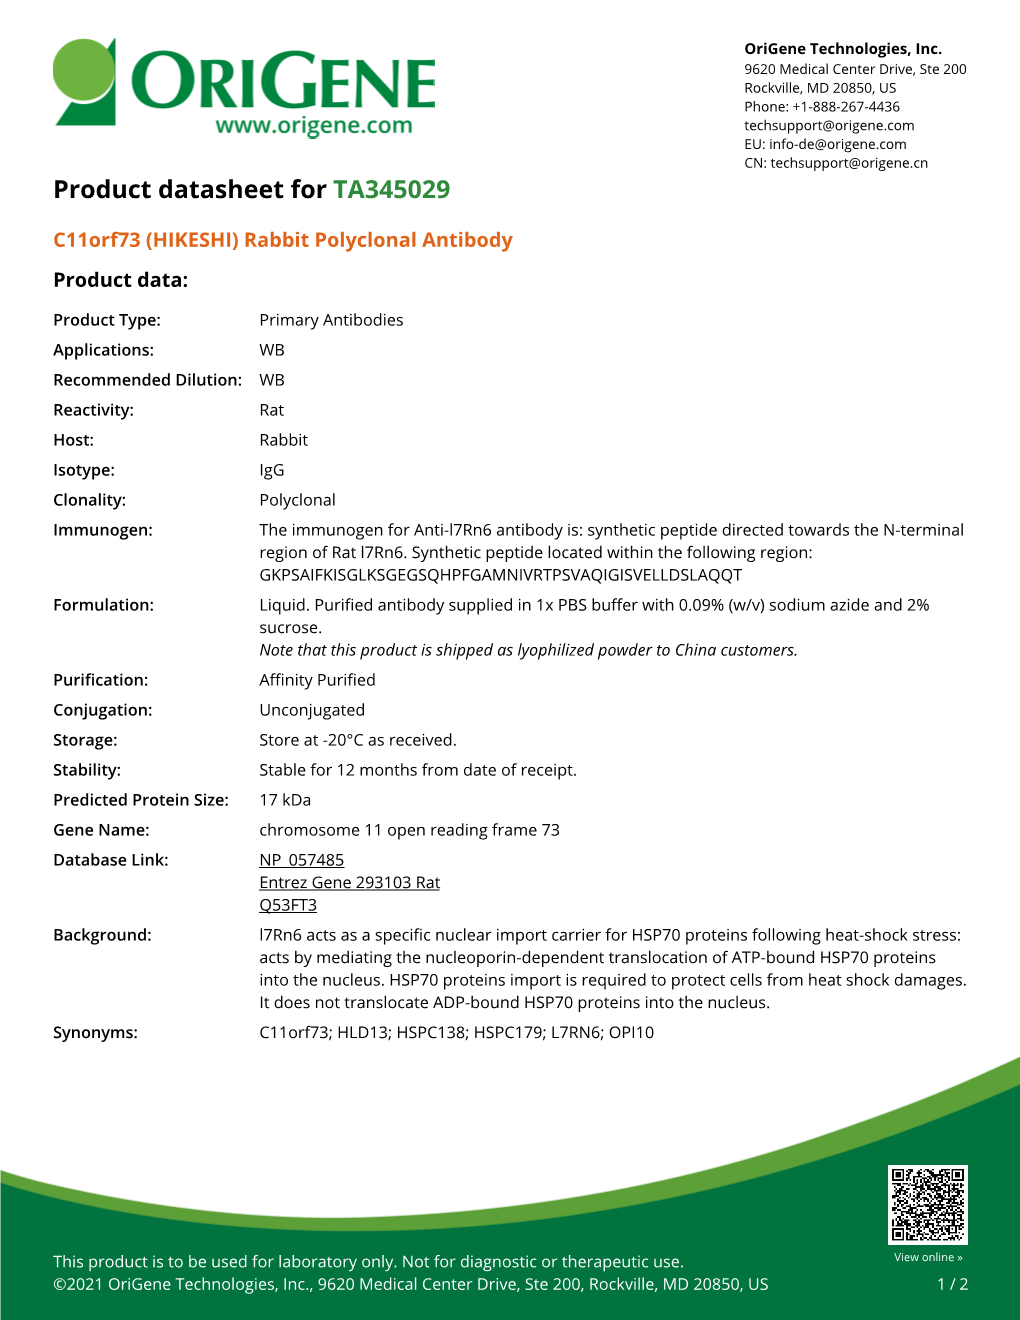 C11orf73 (HIKESHI) Rabbit Polyclonal Antibody – TA345029 | Origene